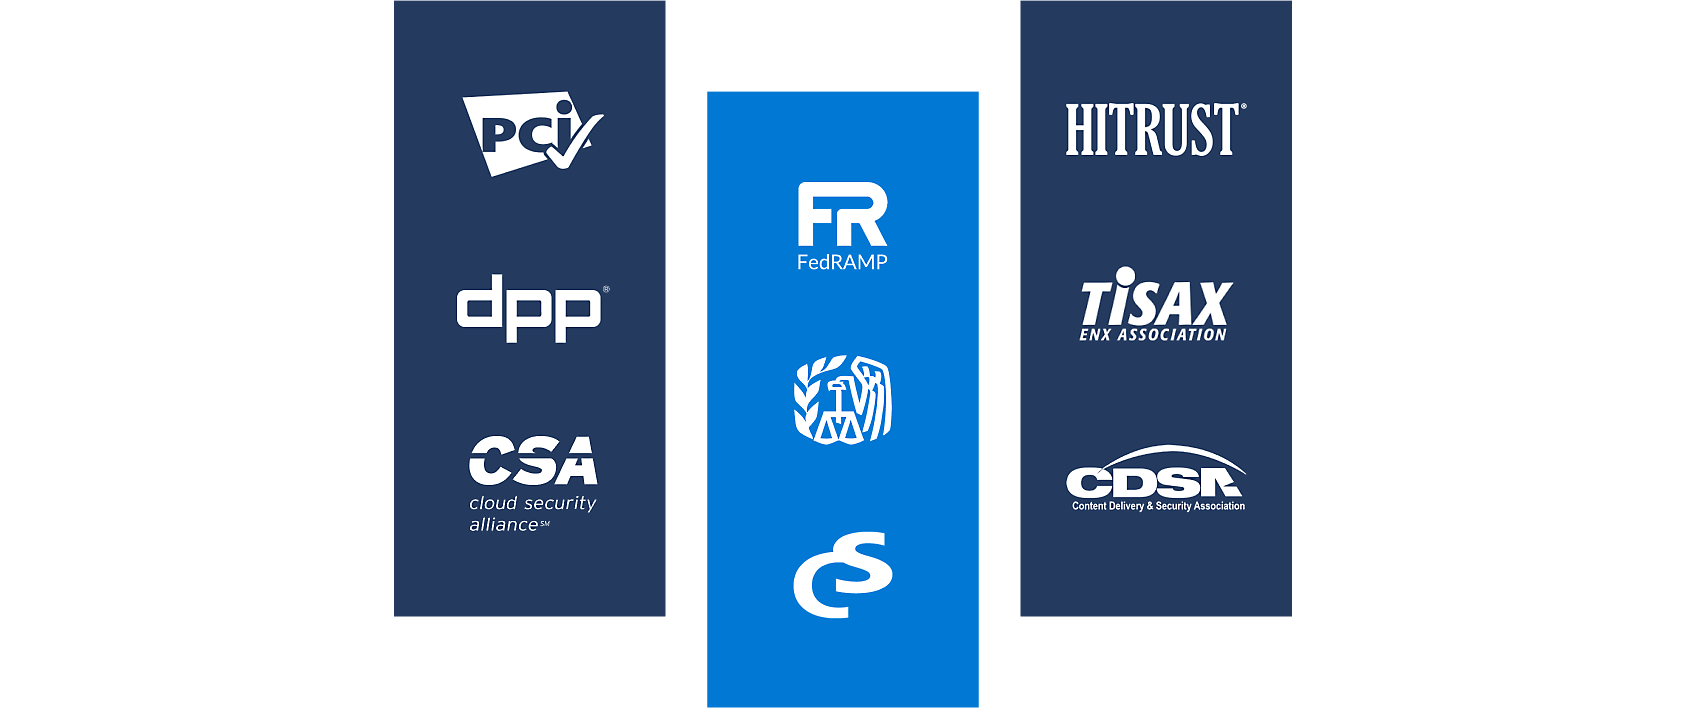 Logotipos da PCI, Cloud Security Alliance, FedRAMP, HITRUST e muitos outros